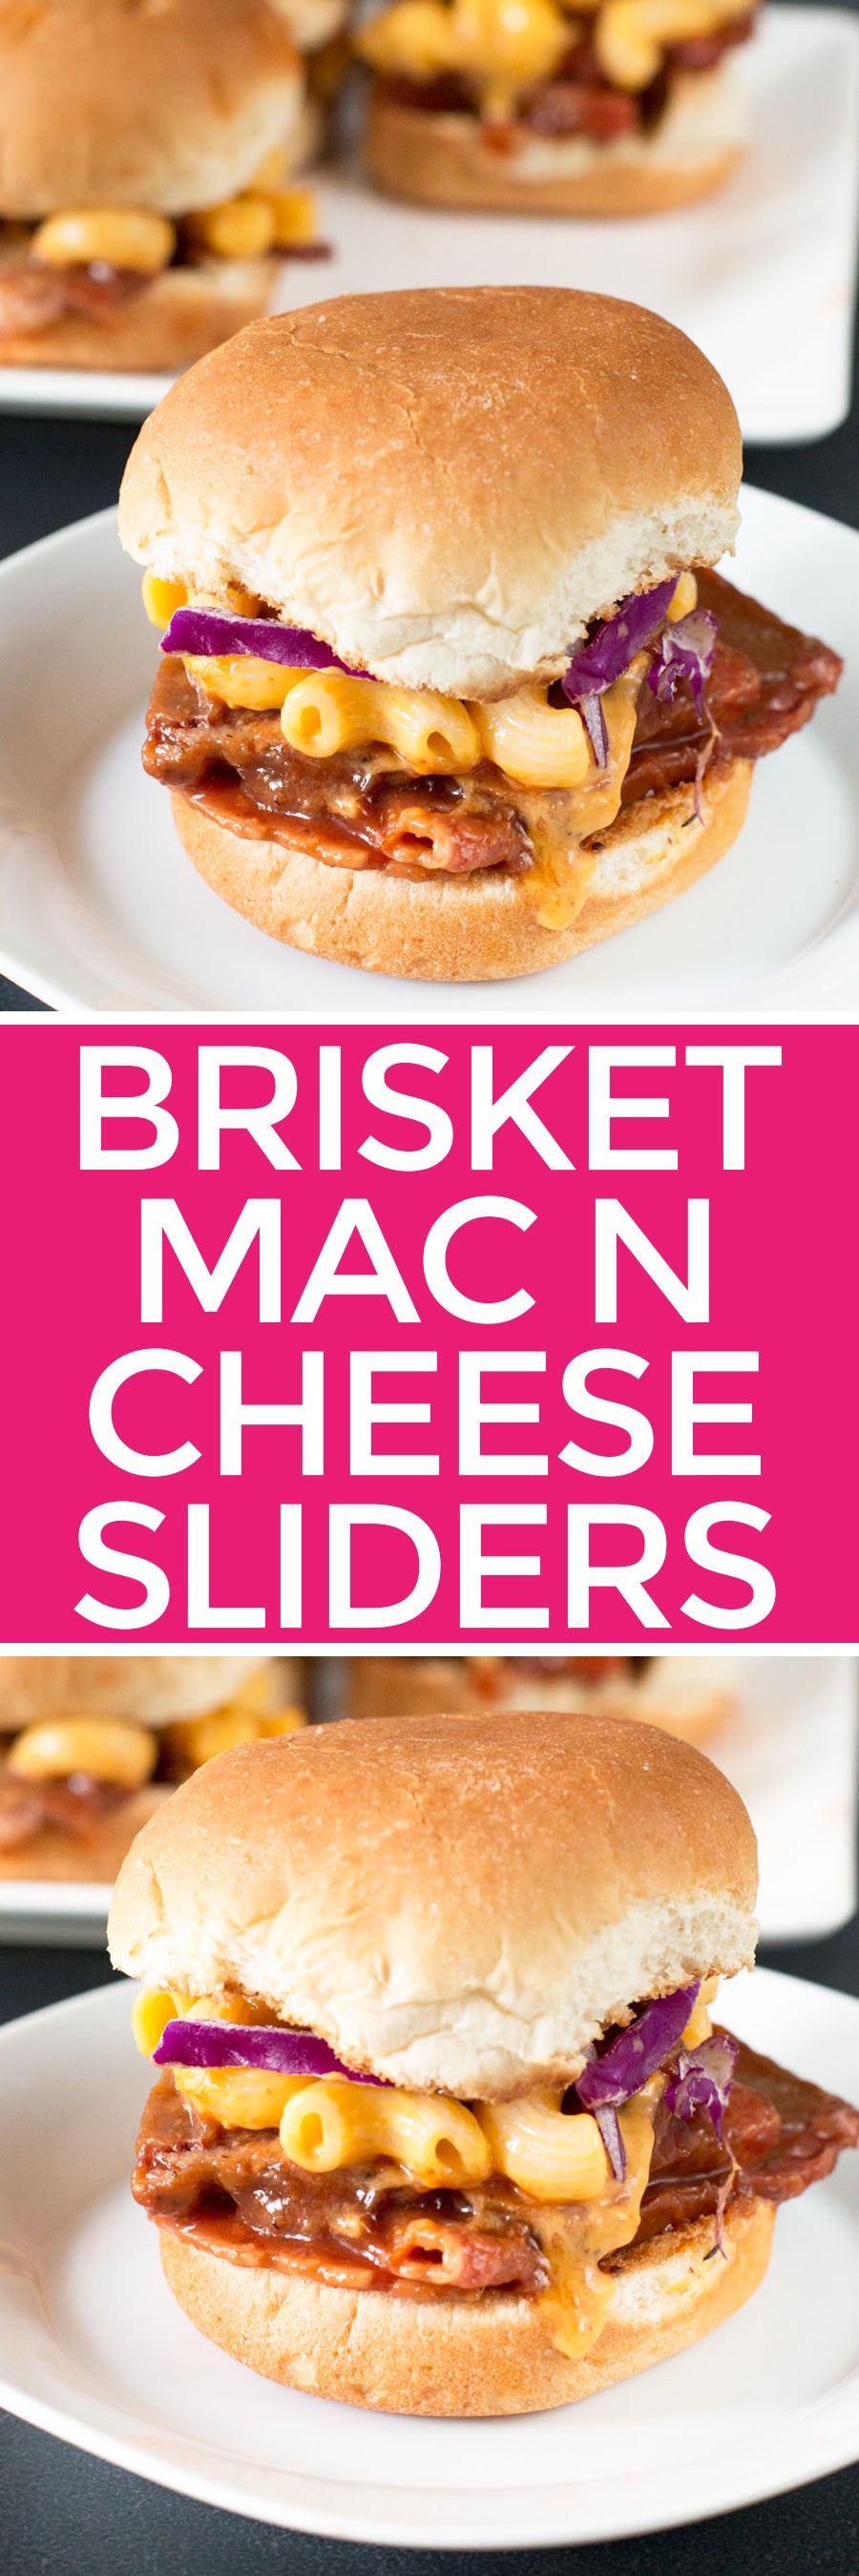 Brisket Mac N Cheese Sliders | pigofthemonth.com #bbq #barbecue #recipe #tailgating